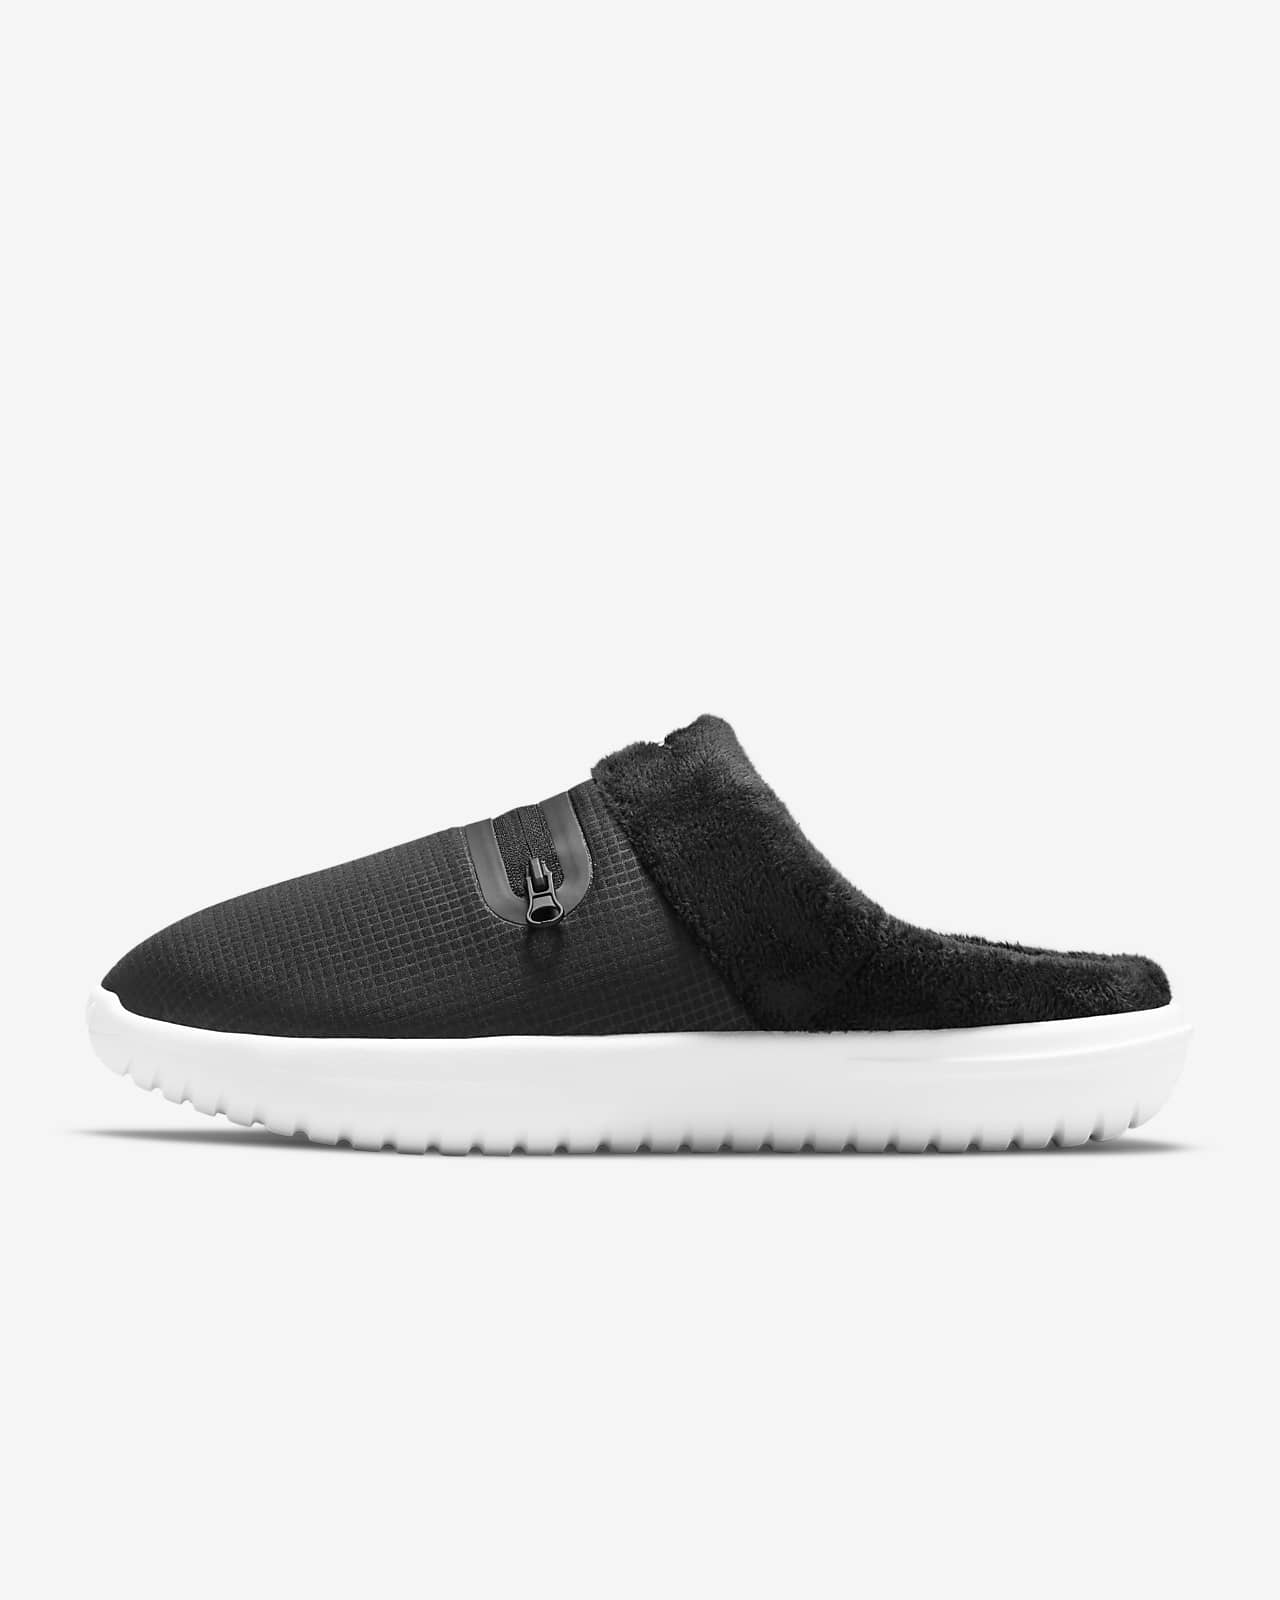 Black EVA Nike Flip Flops, Size: From 6 To 10